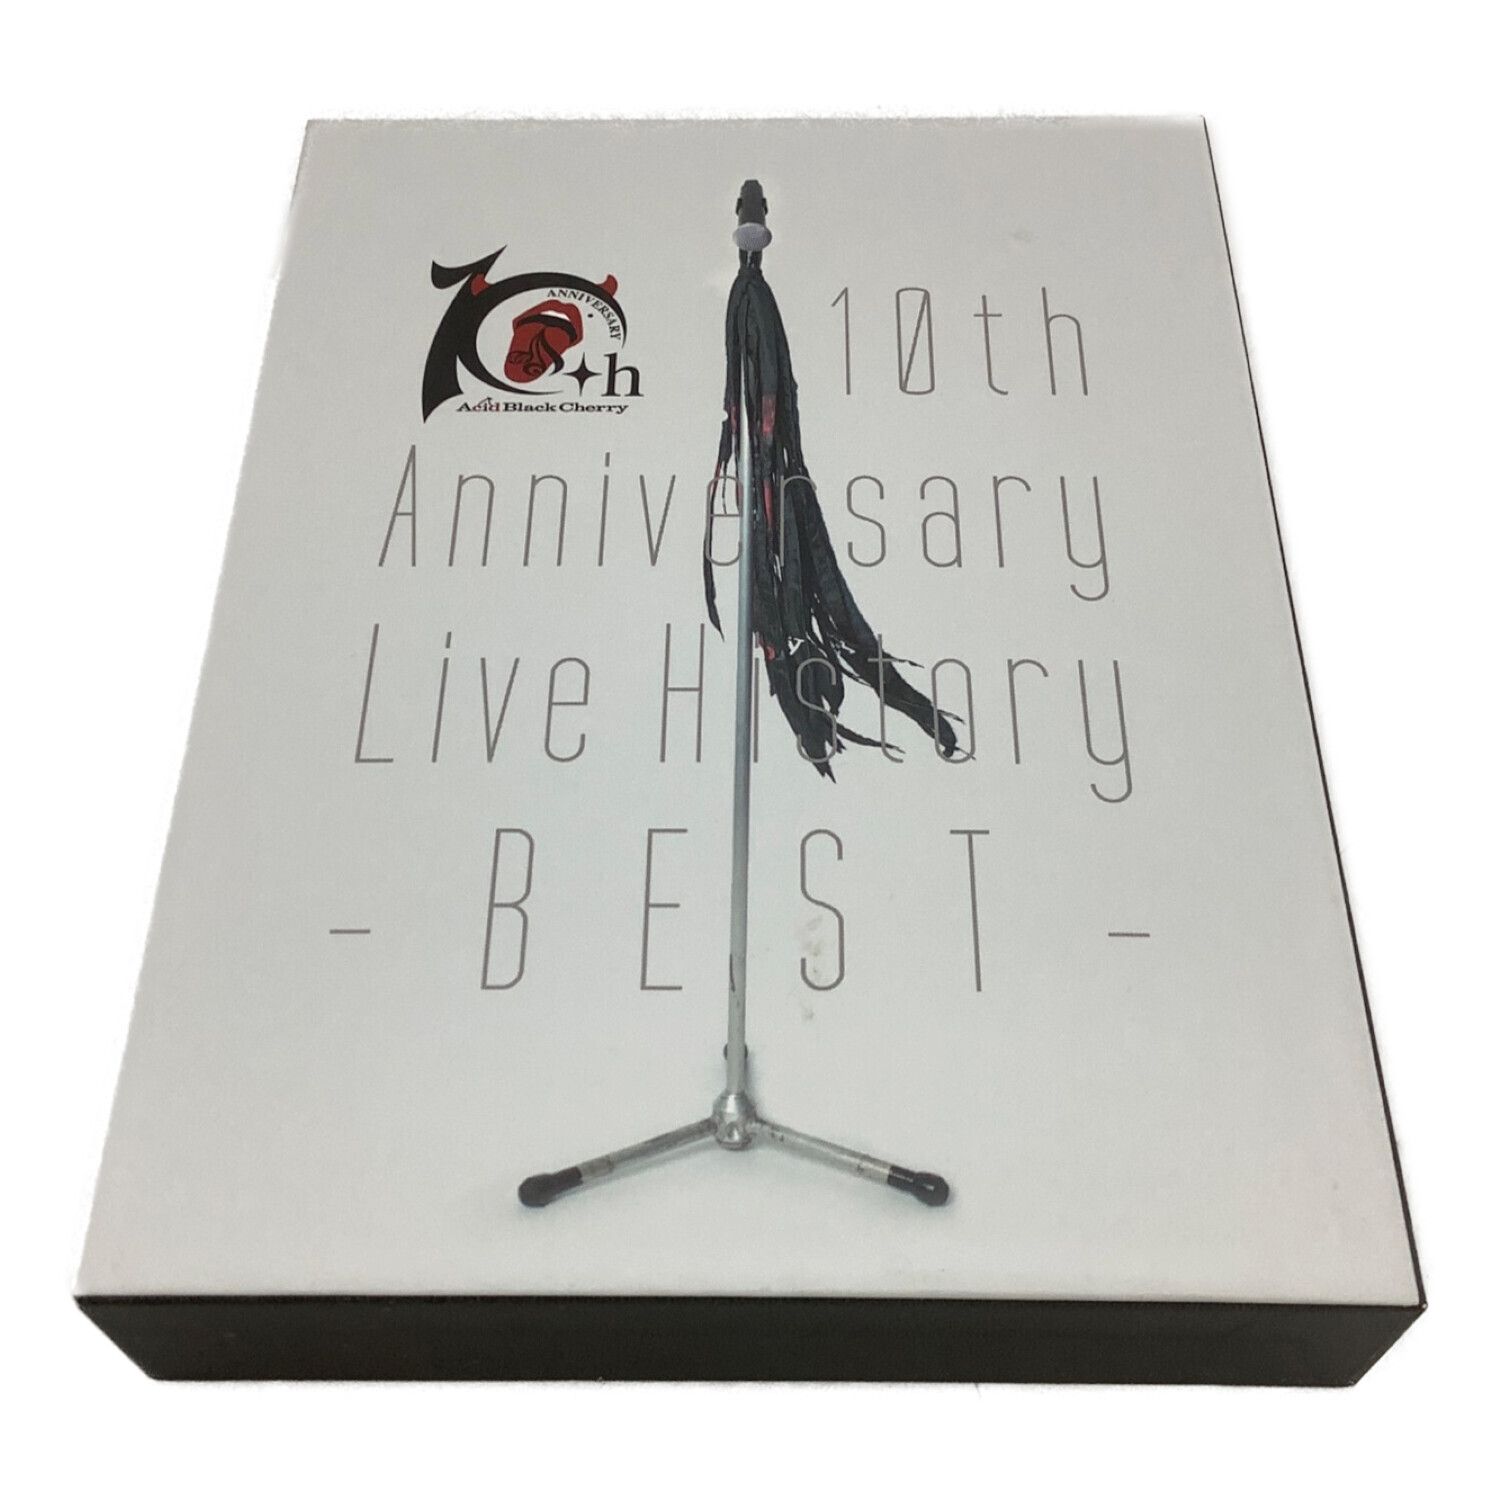 10th Anniversary Live History -BEST- Acid Black Cherry 〇 ...